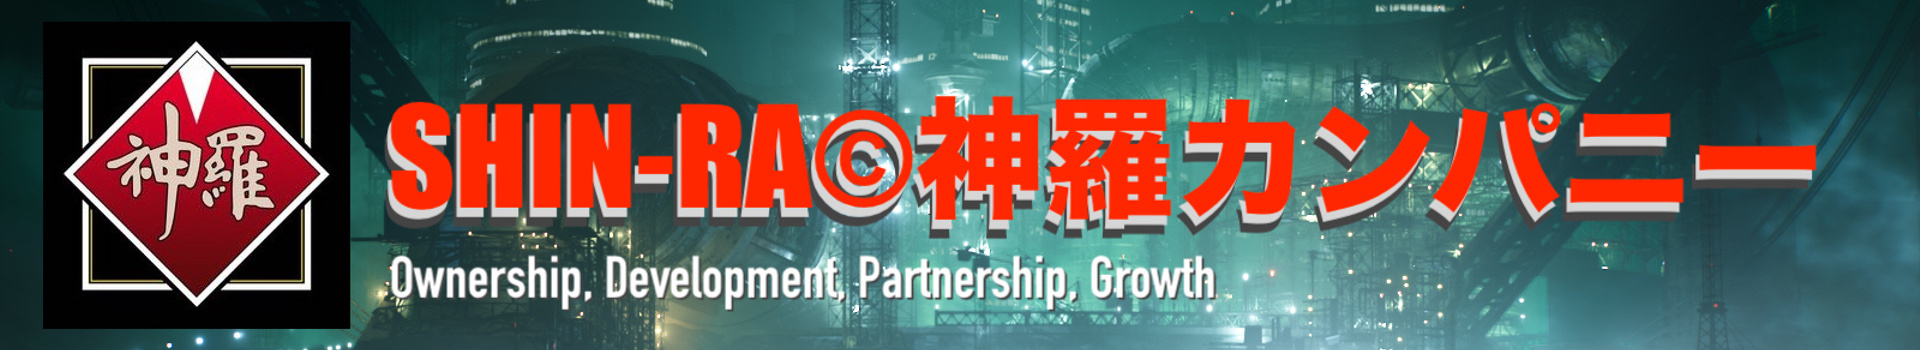 SHIN-RA©神羅カンパニー • Ownership, Development, Partnership, Growth